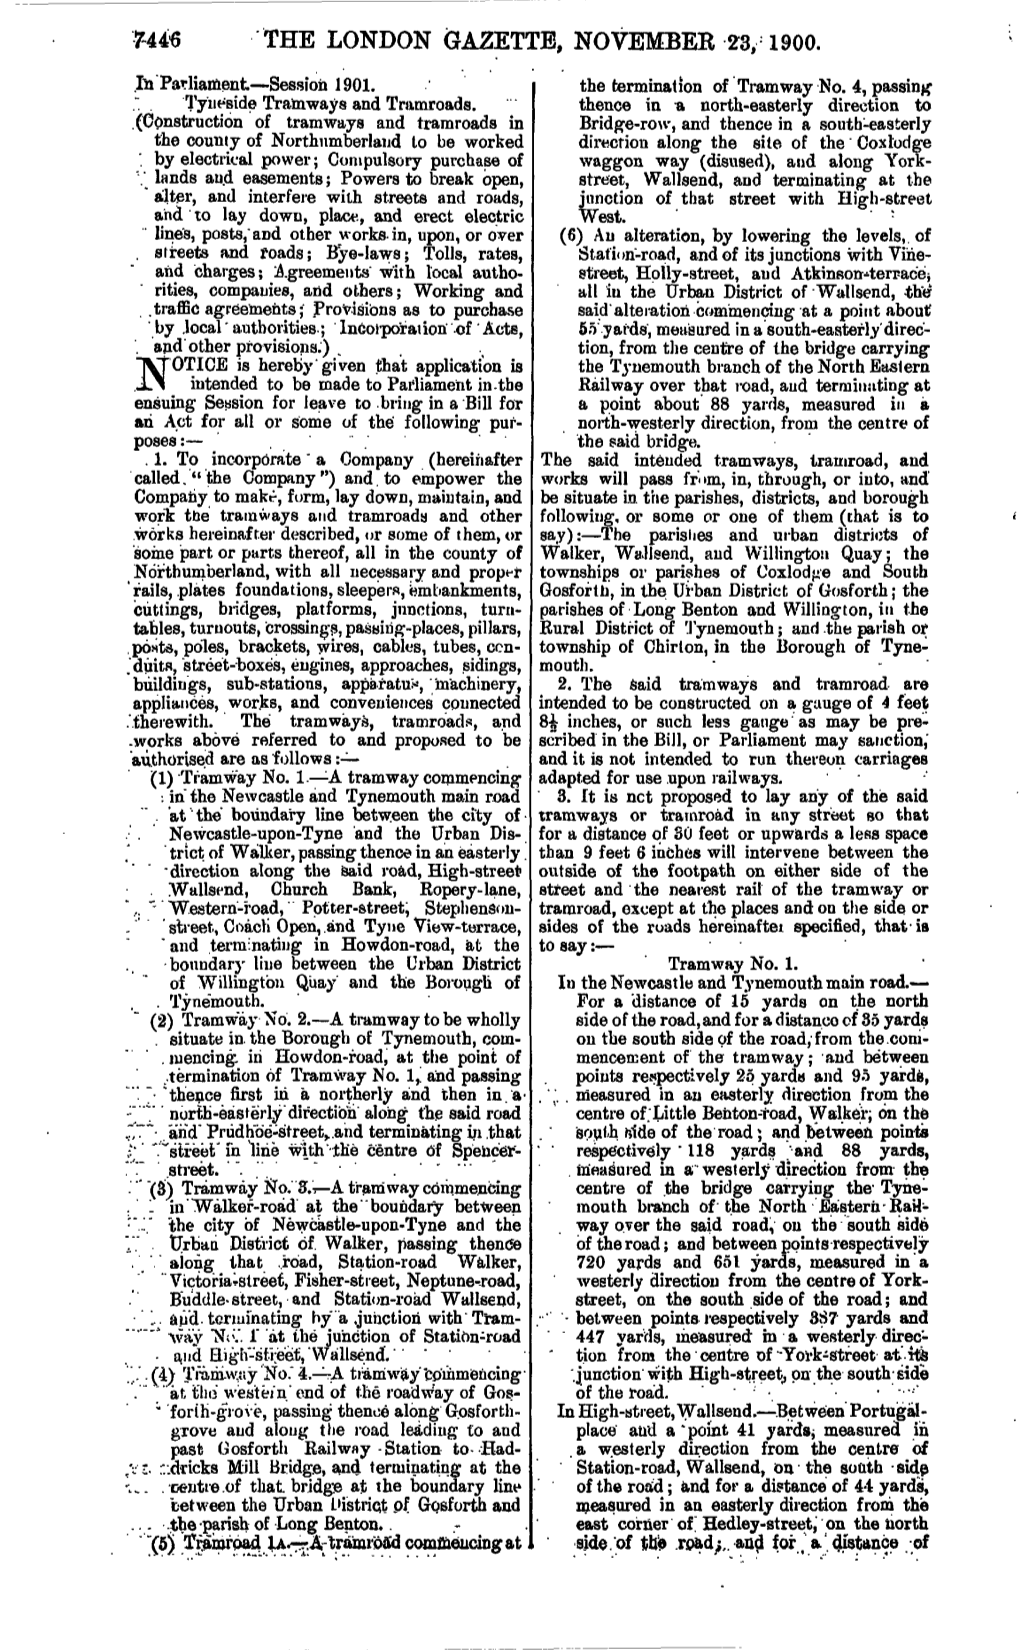 7-446 the London Gazette, November 23, 1900. "(5